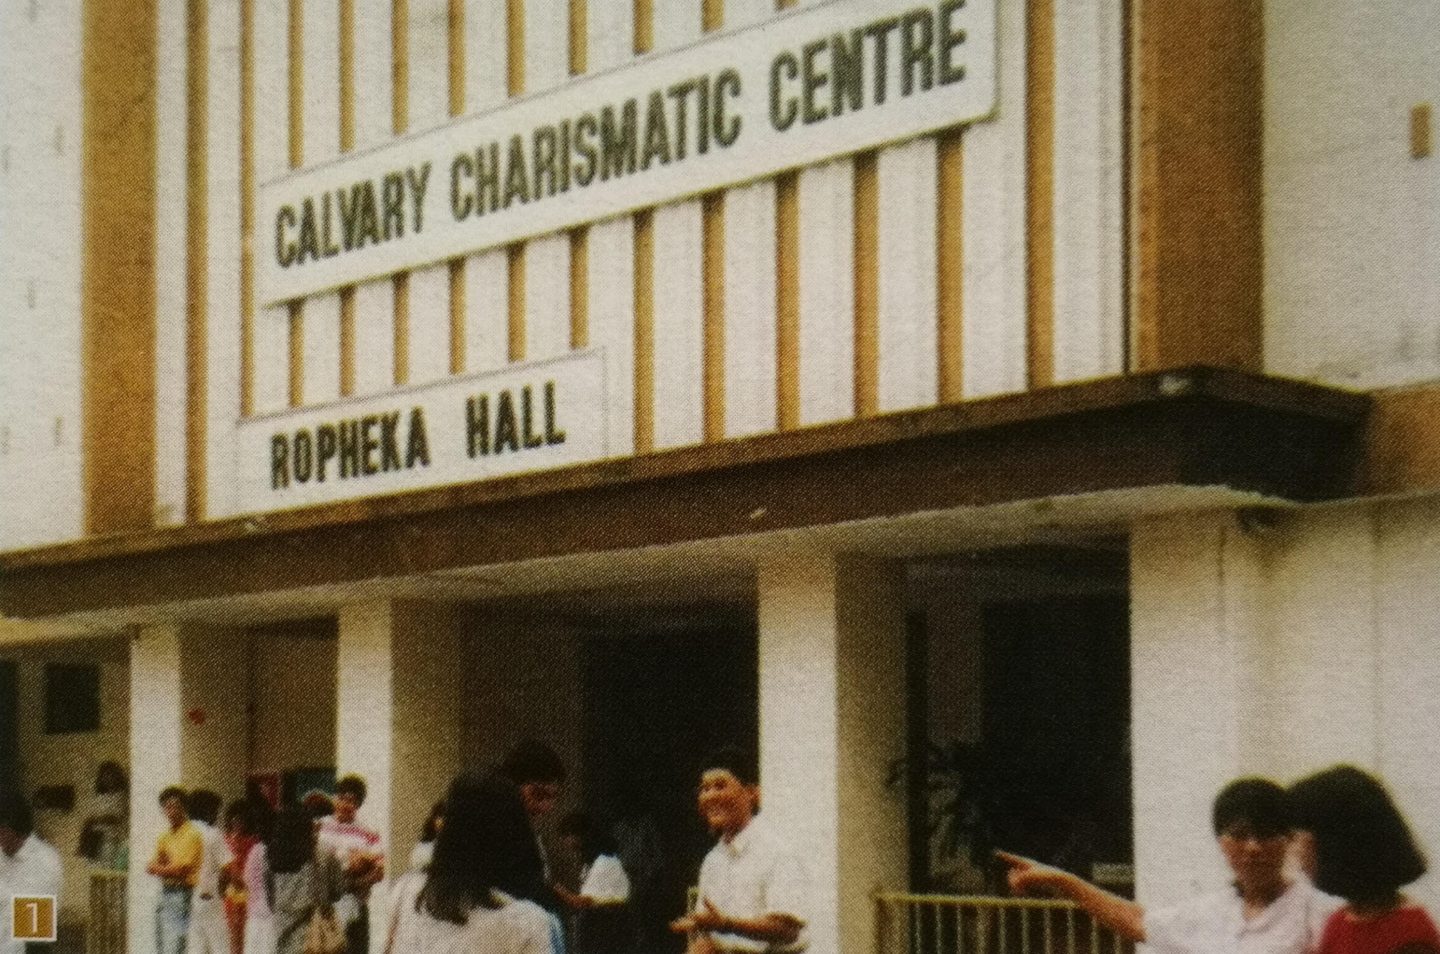 Calvary Charismatic Centre, 80s